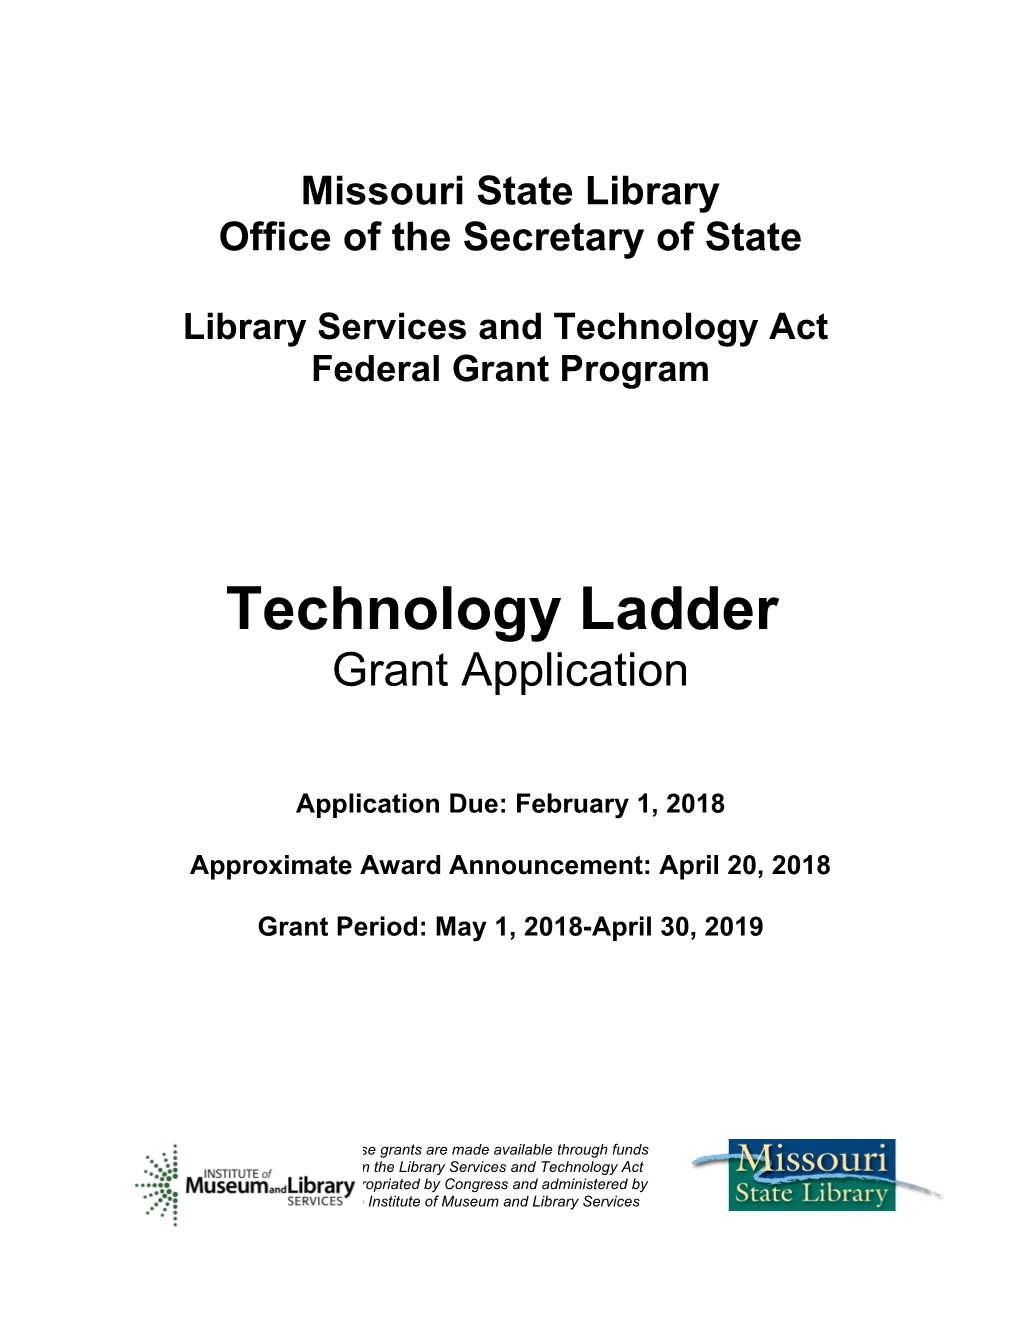 Technology Ladder Grant Application